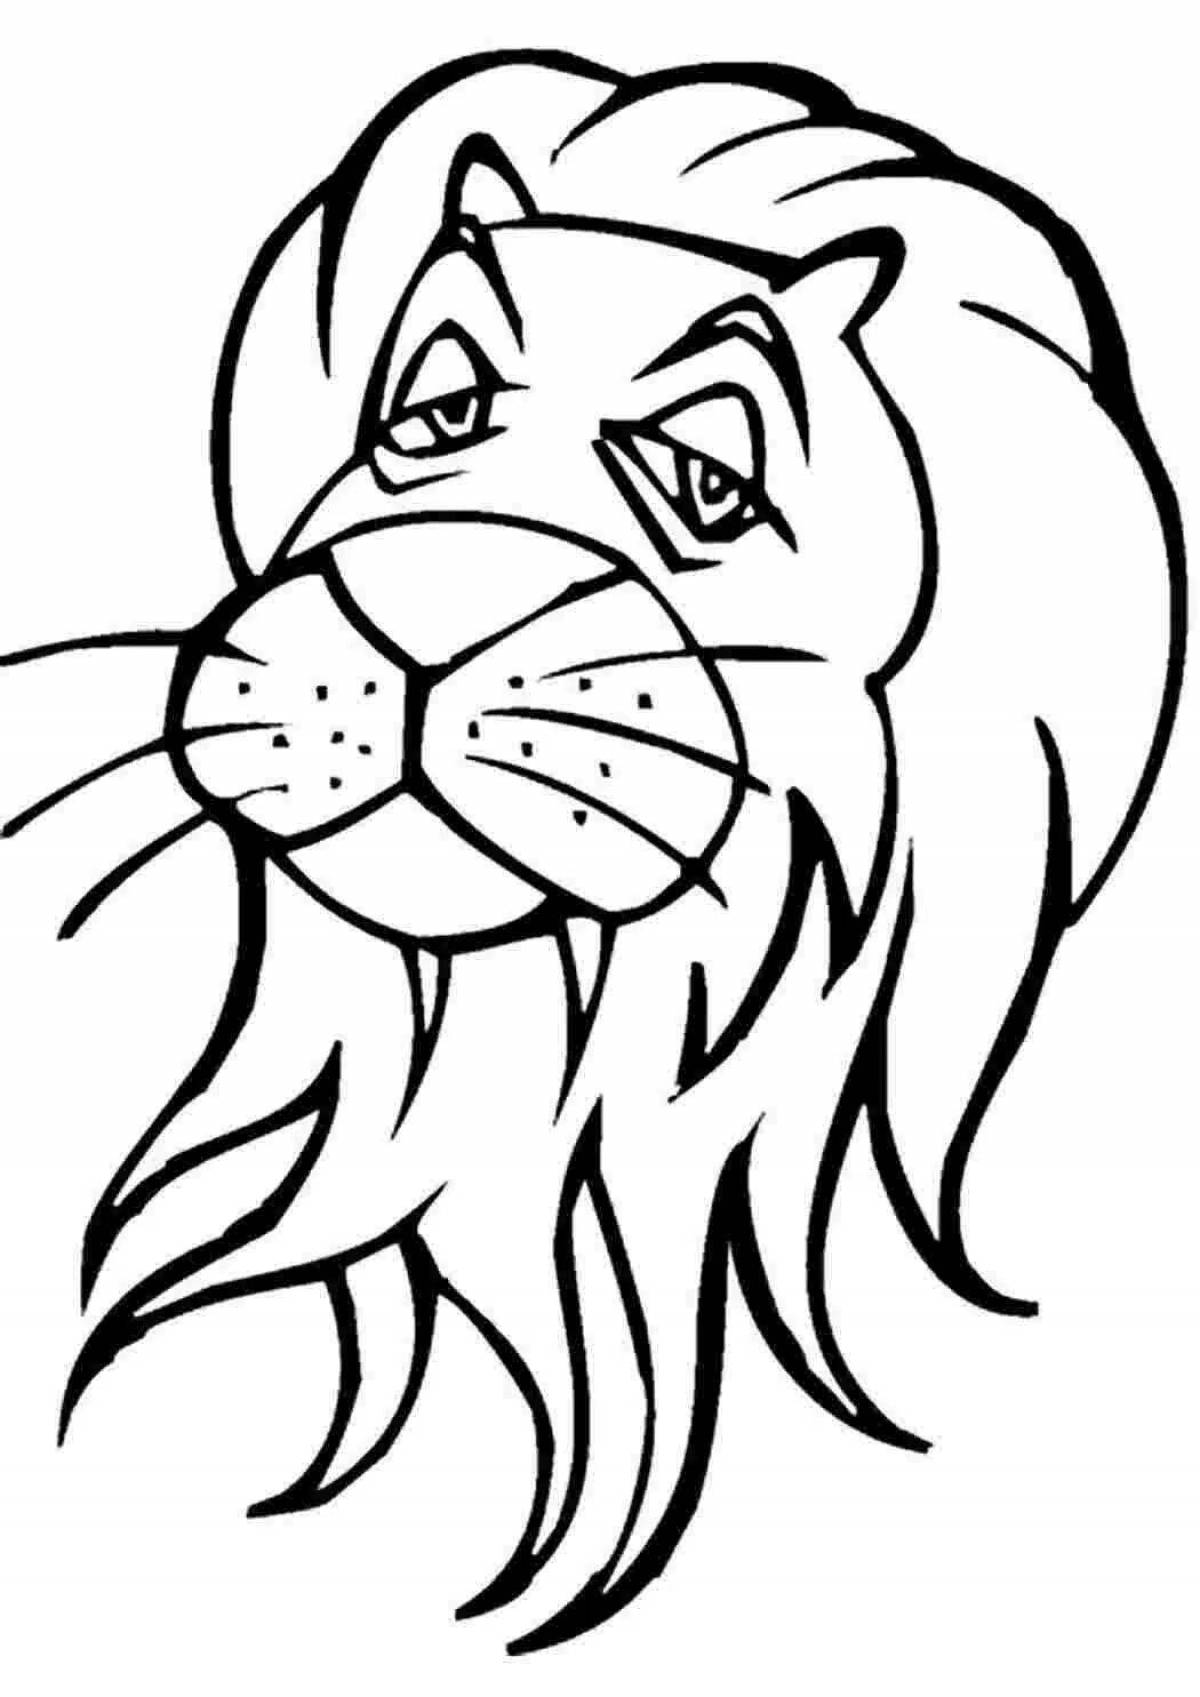 Coloring page elegant lion head